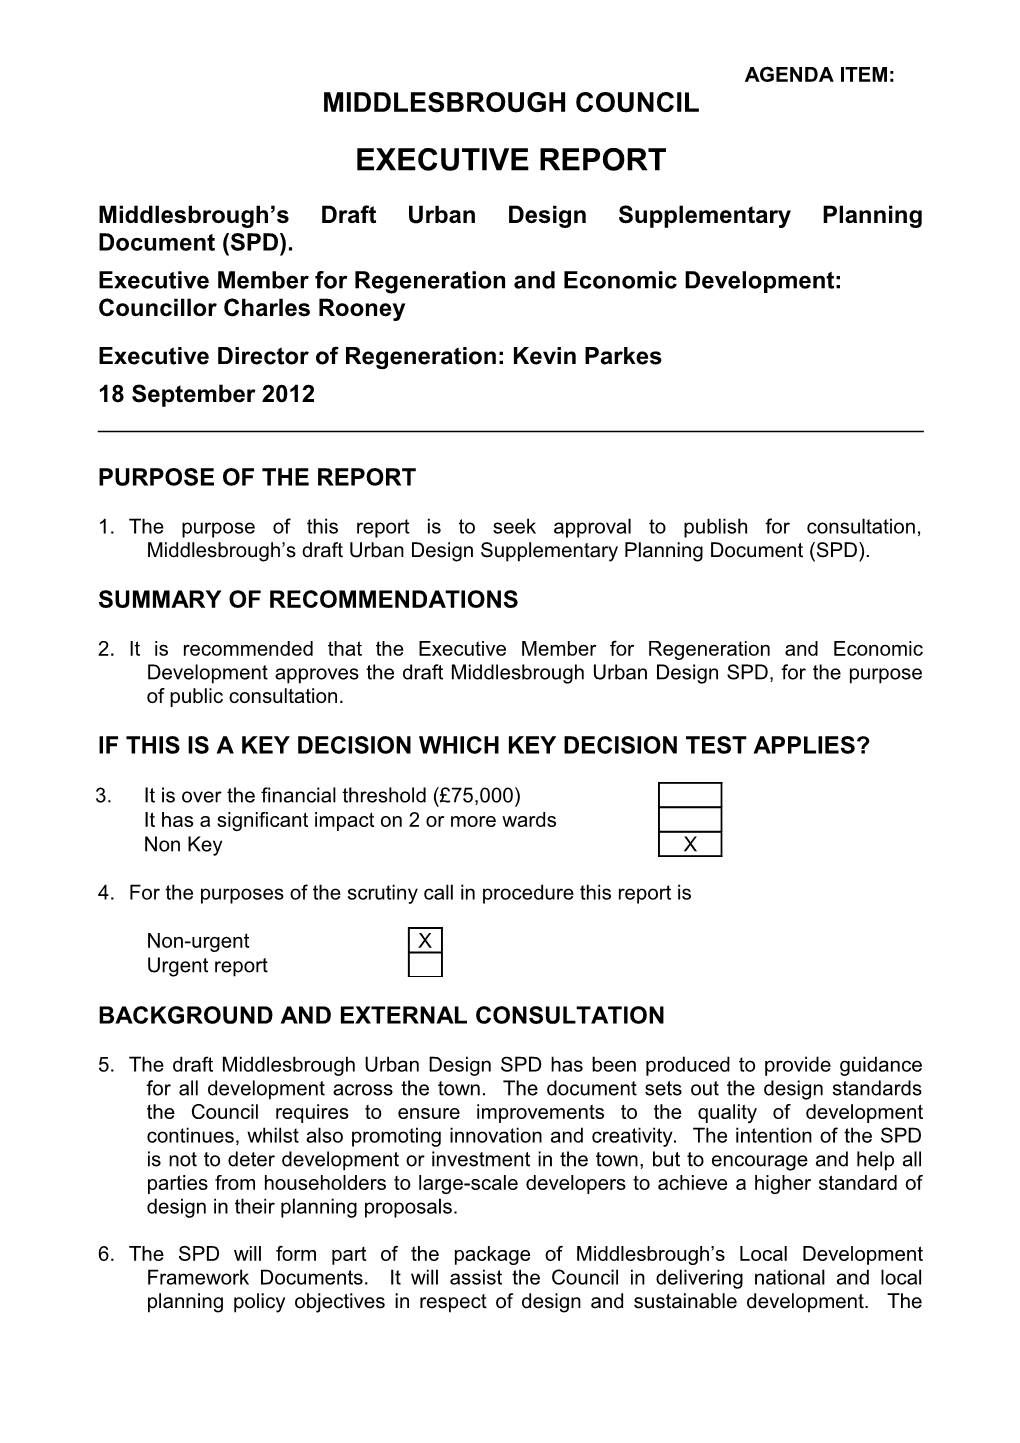 Middlesbrough S Draft Urban Design Supplementary Planning Document (SPD)